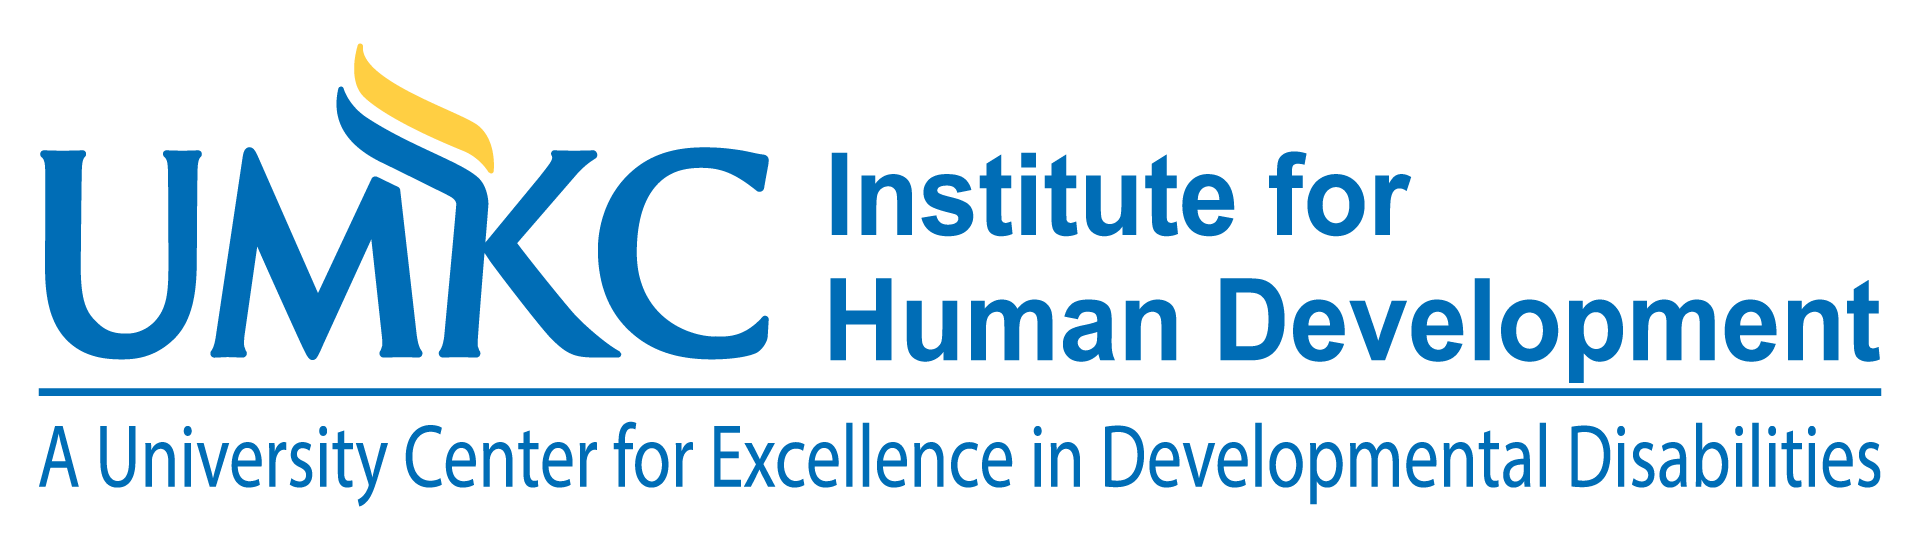 UMKC Institute for Human Development